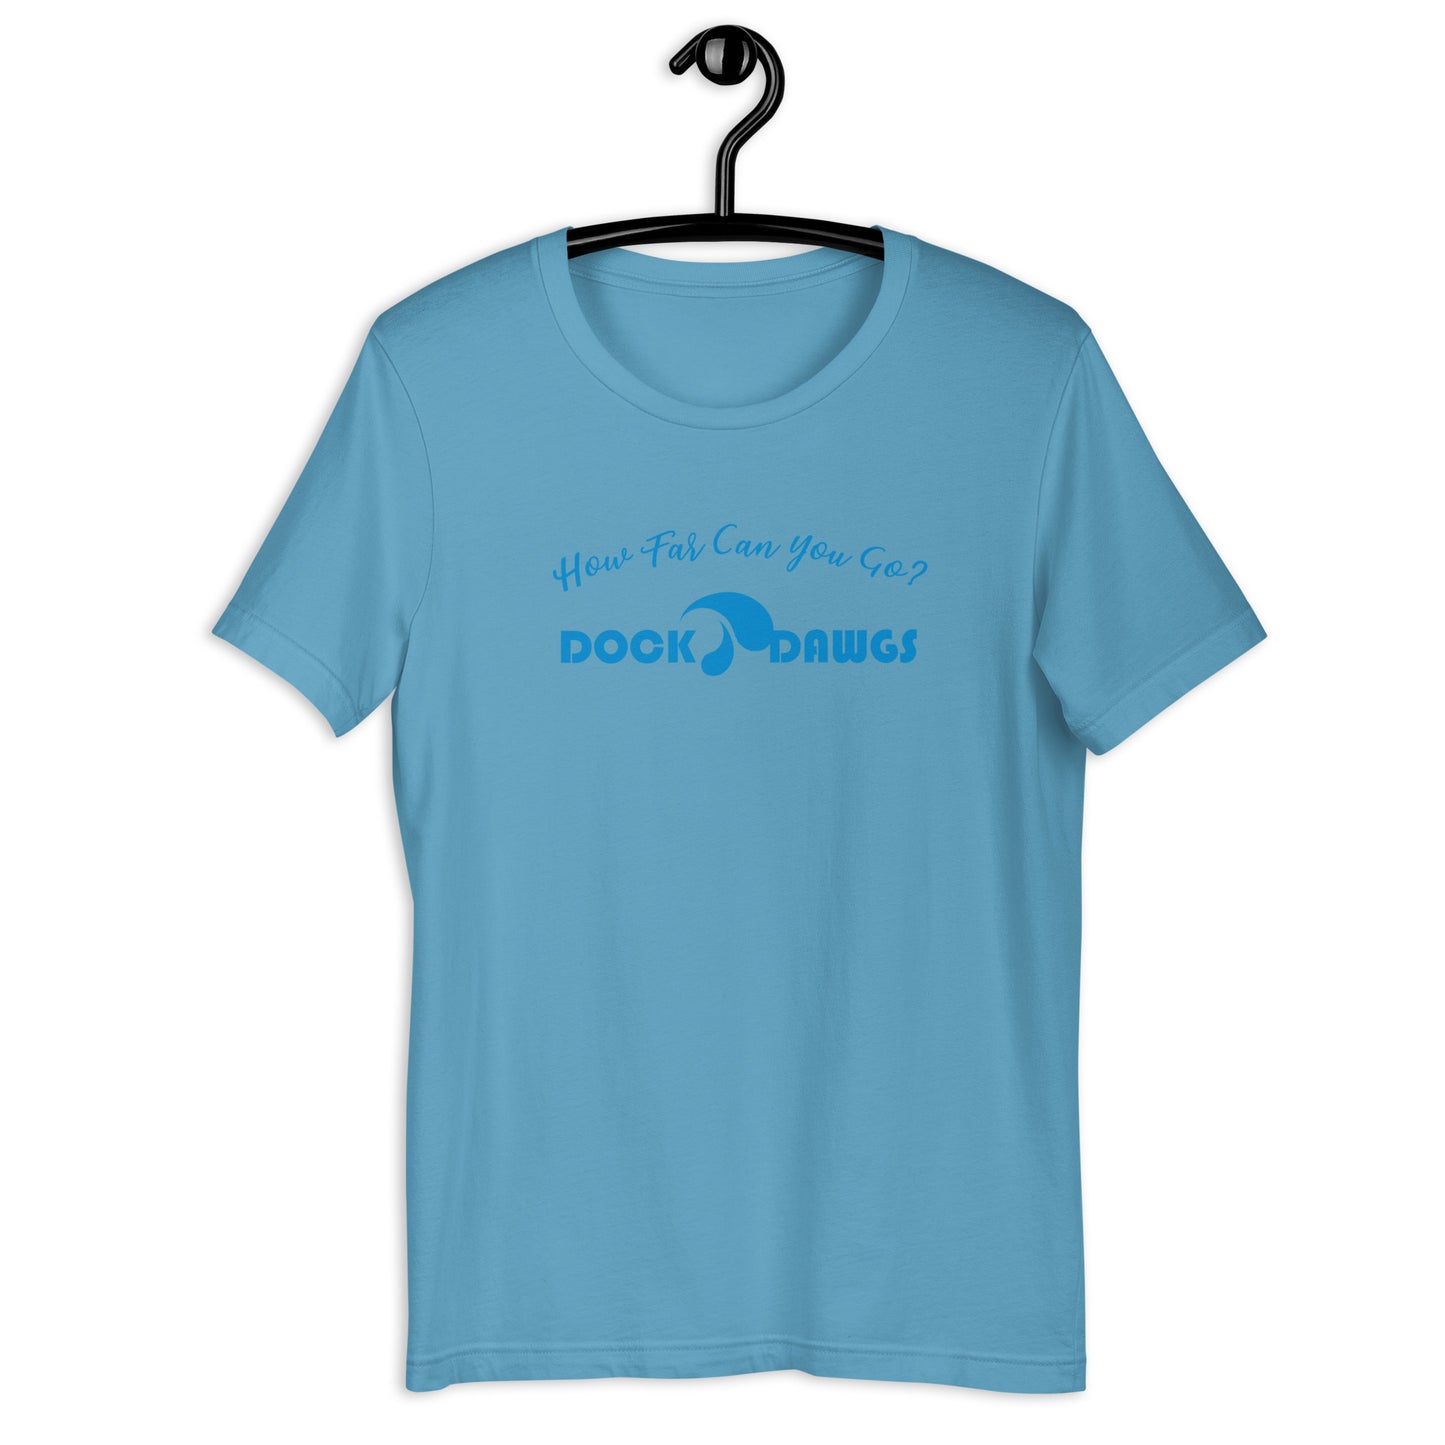 HOW FAR CAN YOU GO - DOCK DAWGS - Unisex t-shirt